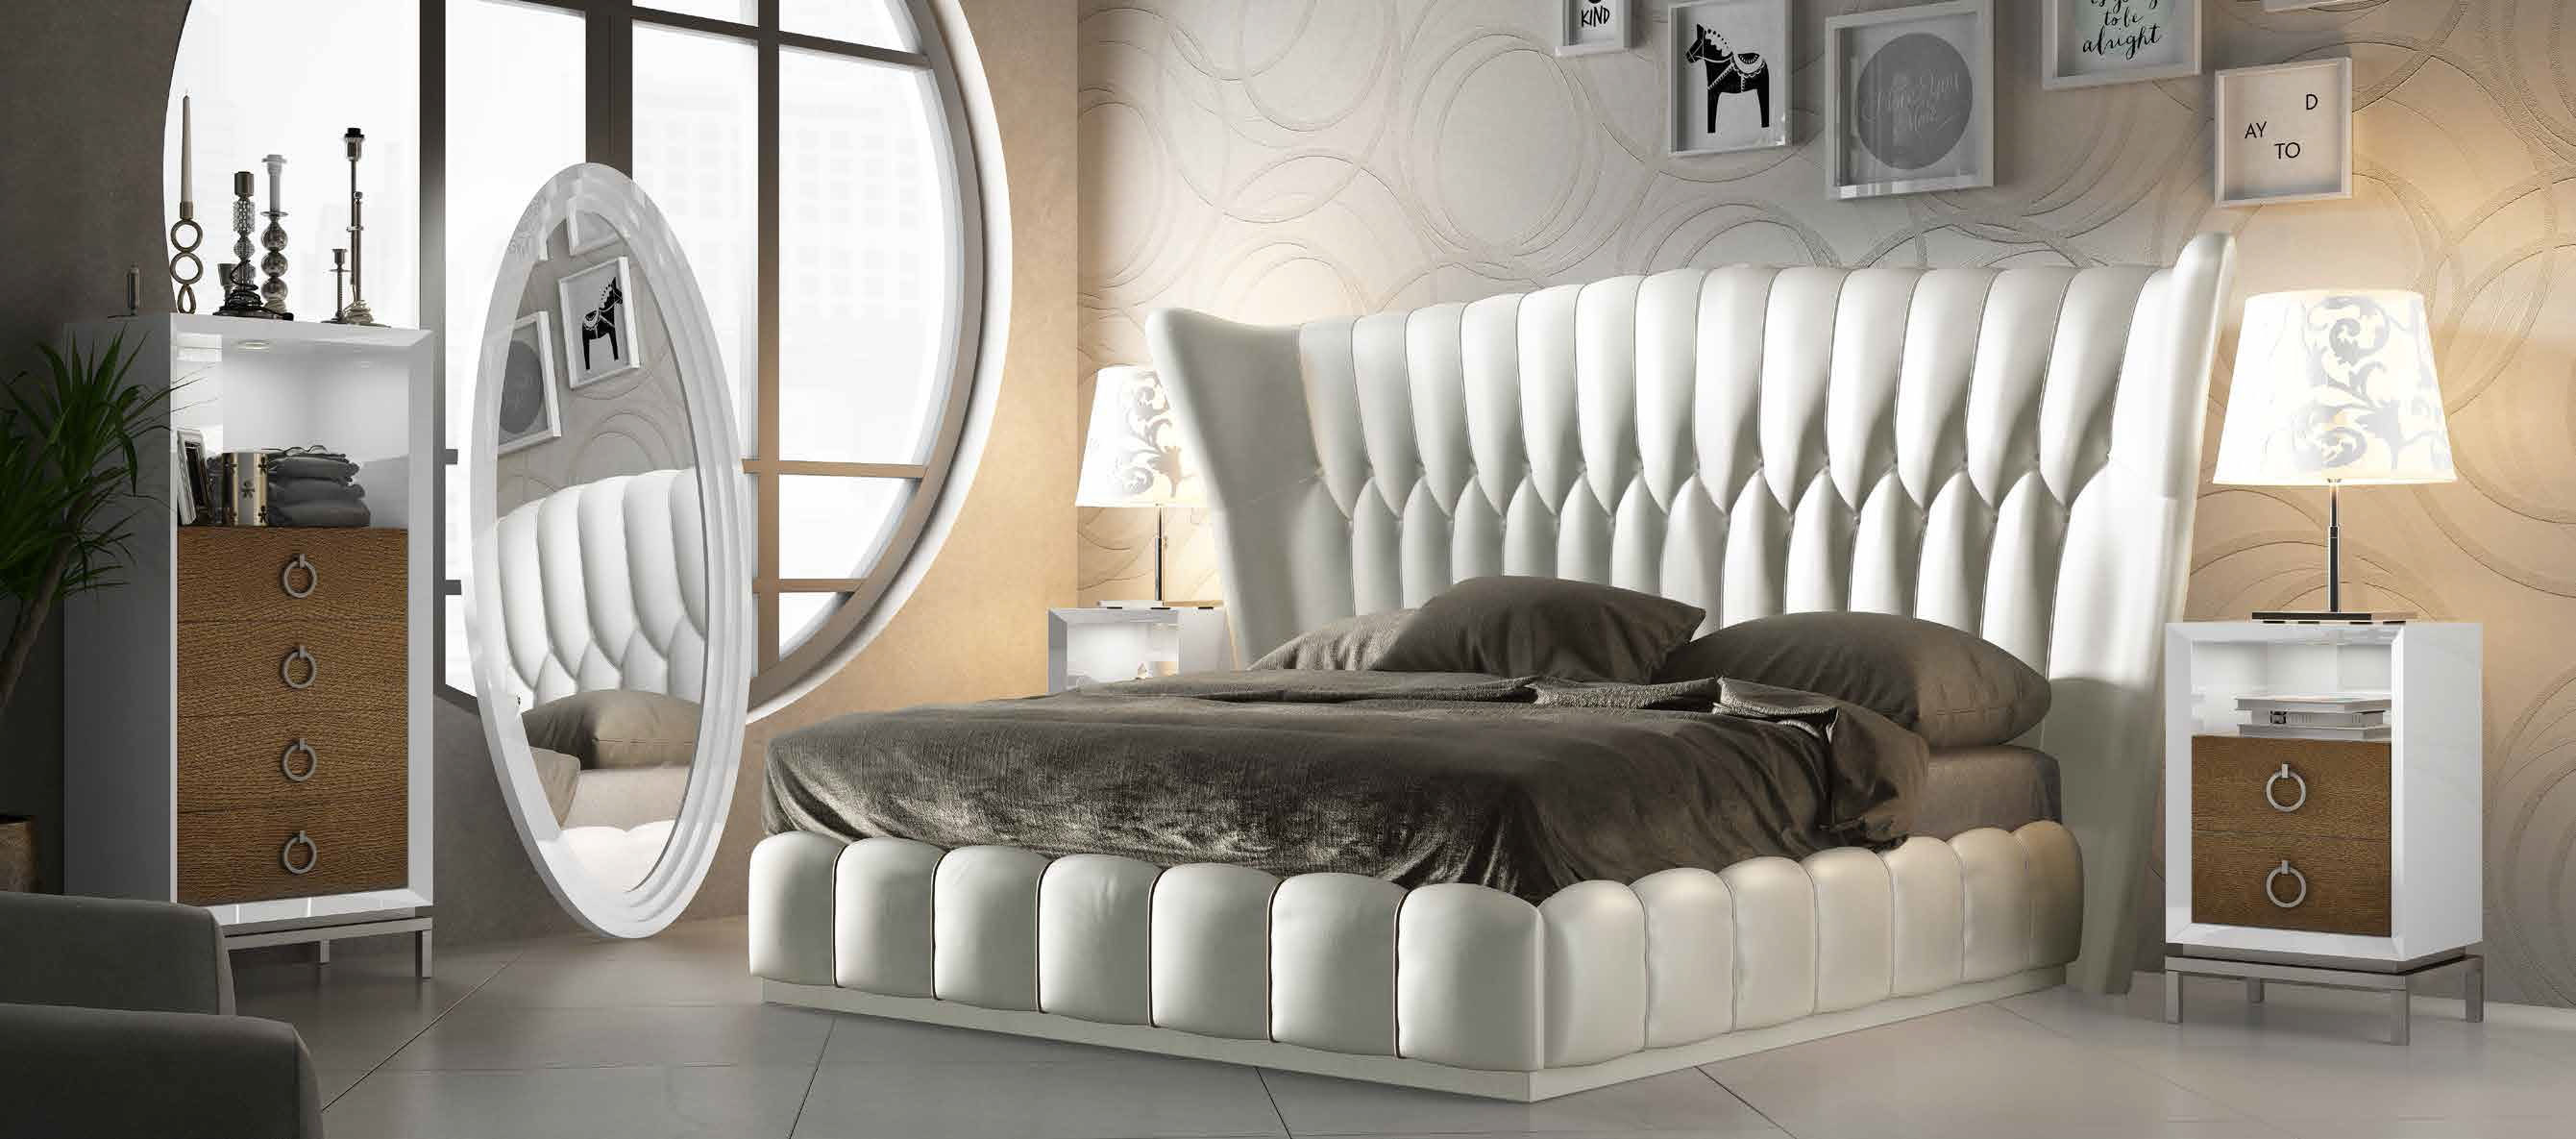 Brands Franco Furniture Bedrooms vol3, Spain DOR 50